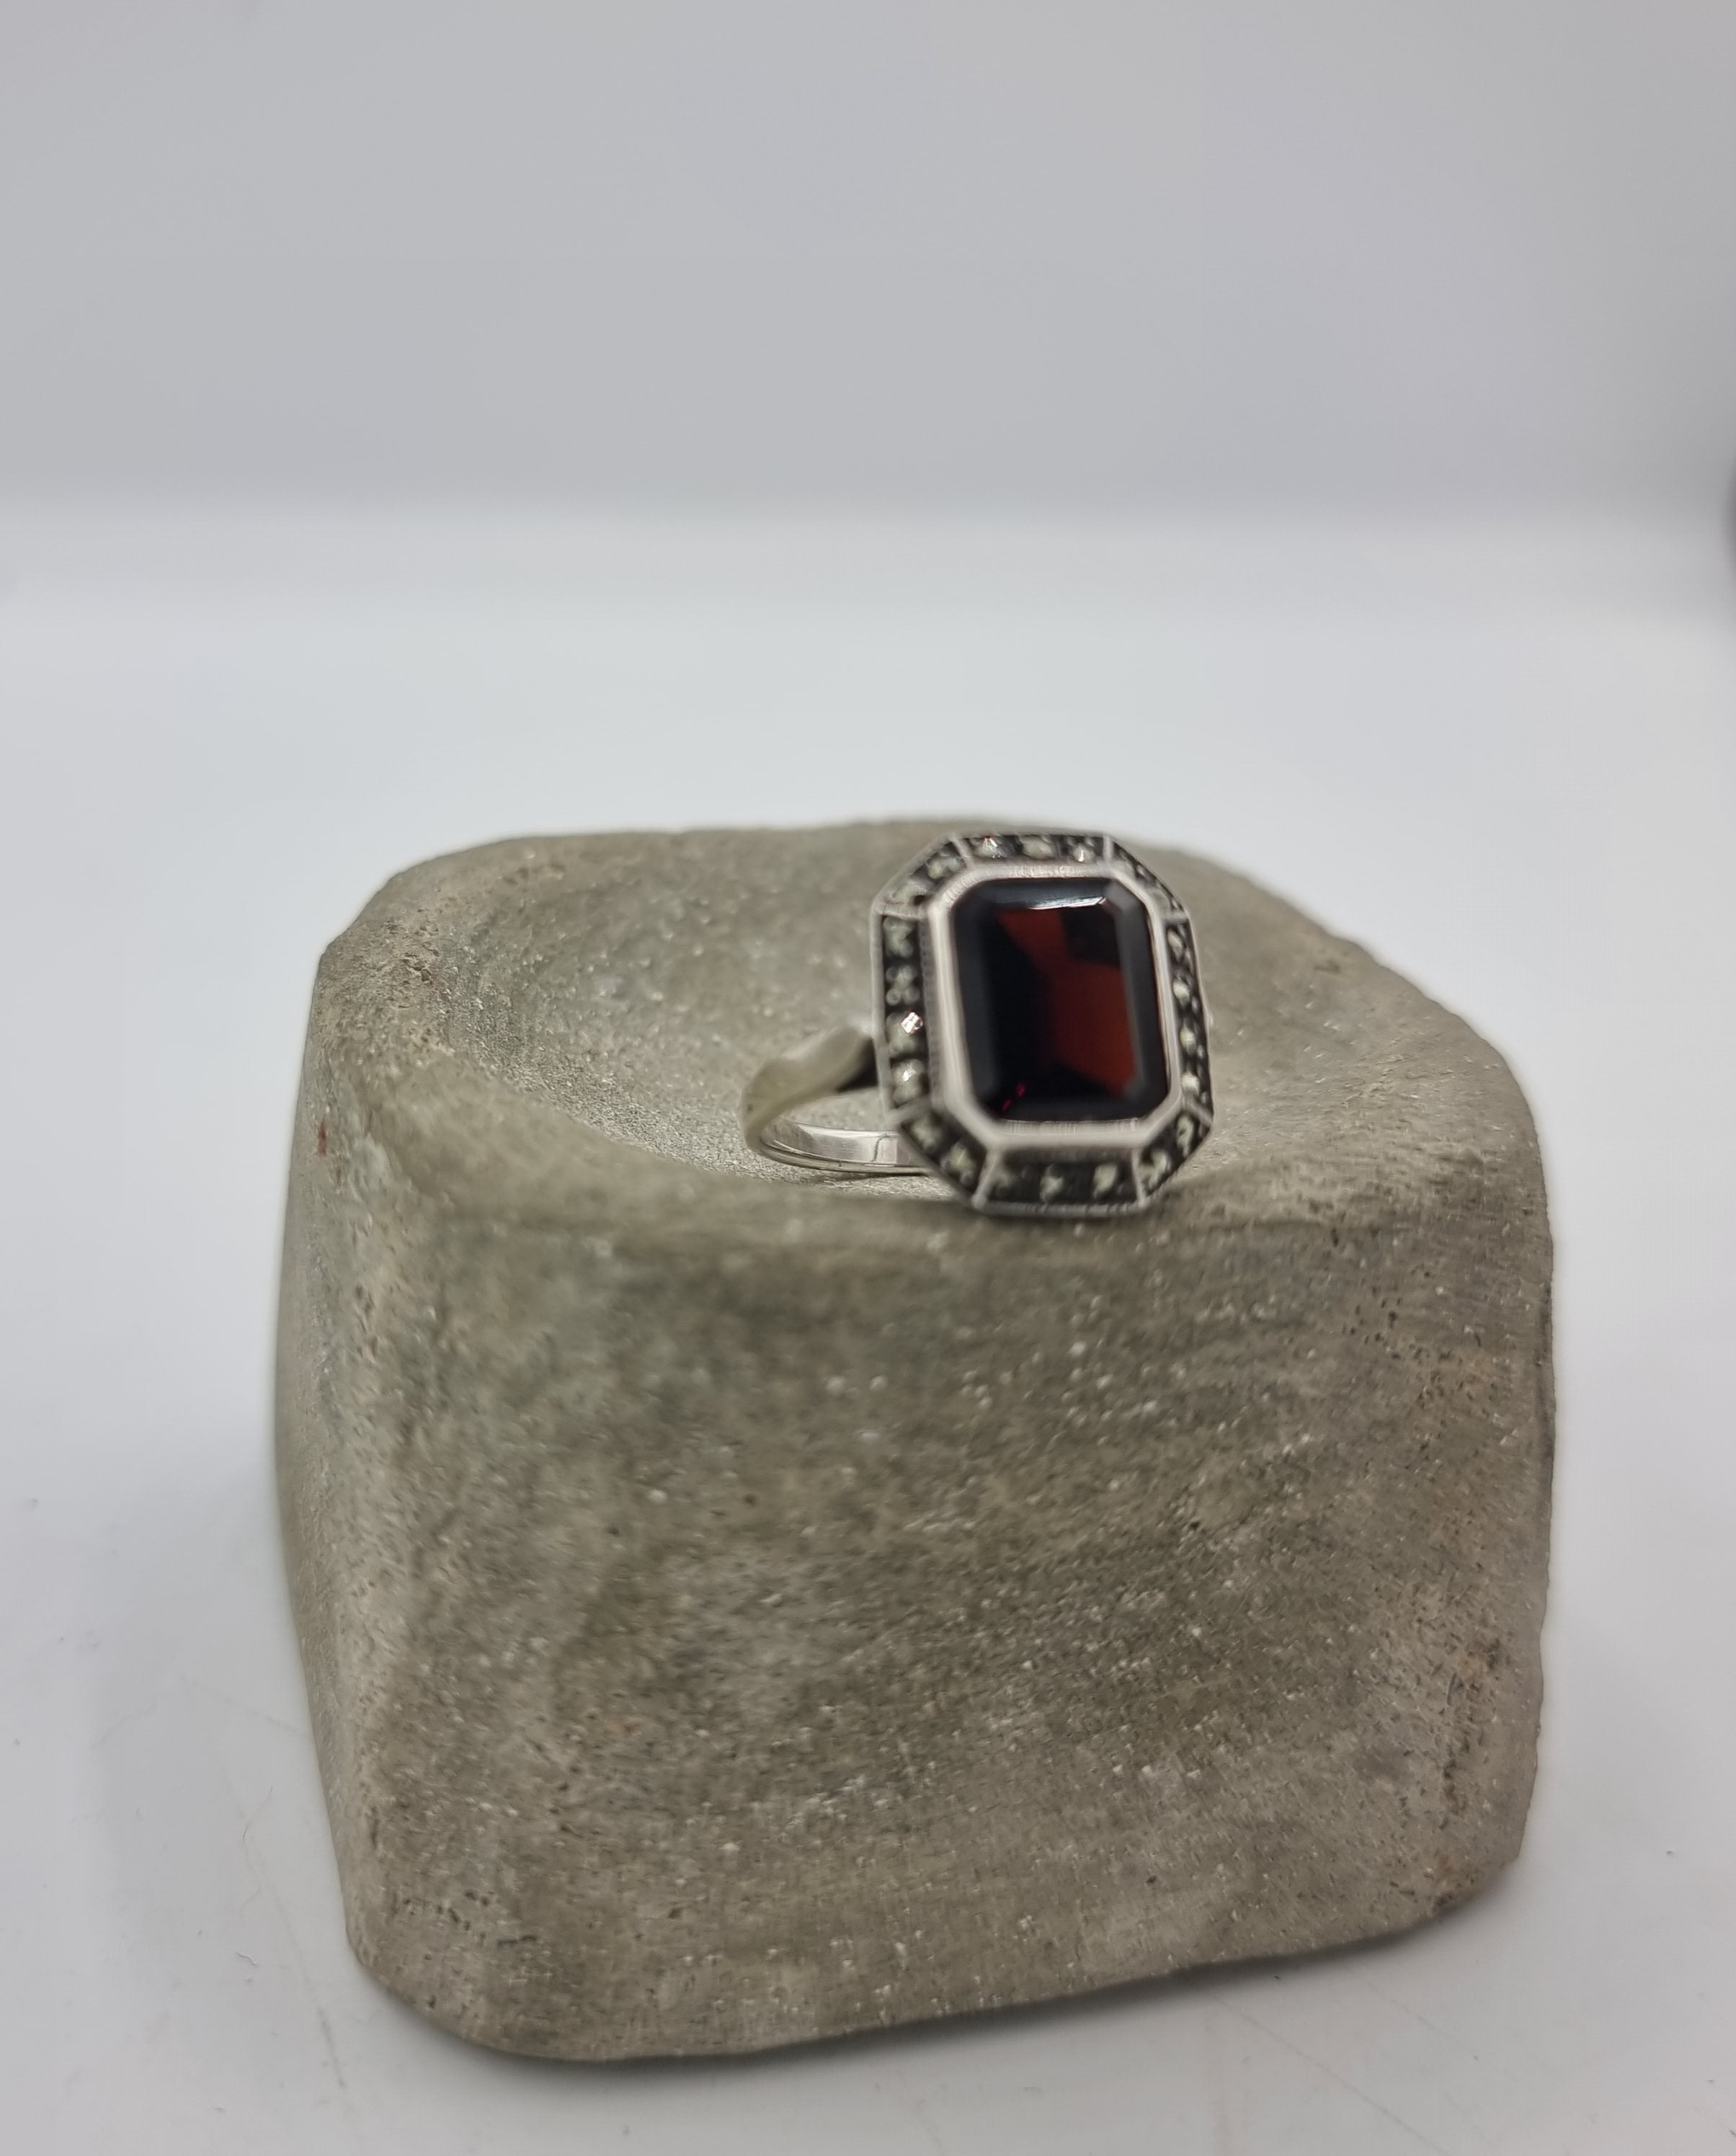 1930s silver ring - Maracasite deco jewellery - Red garnet